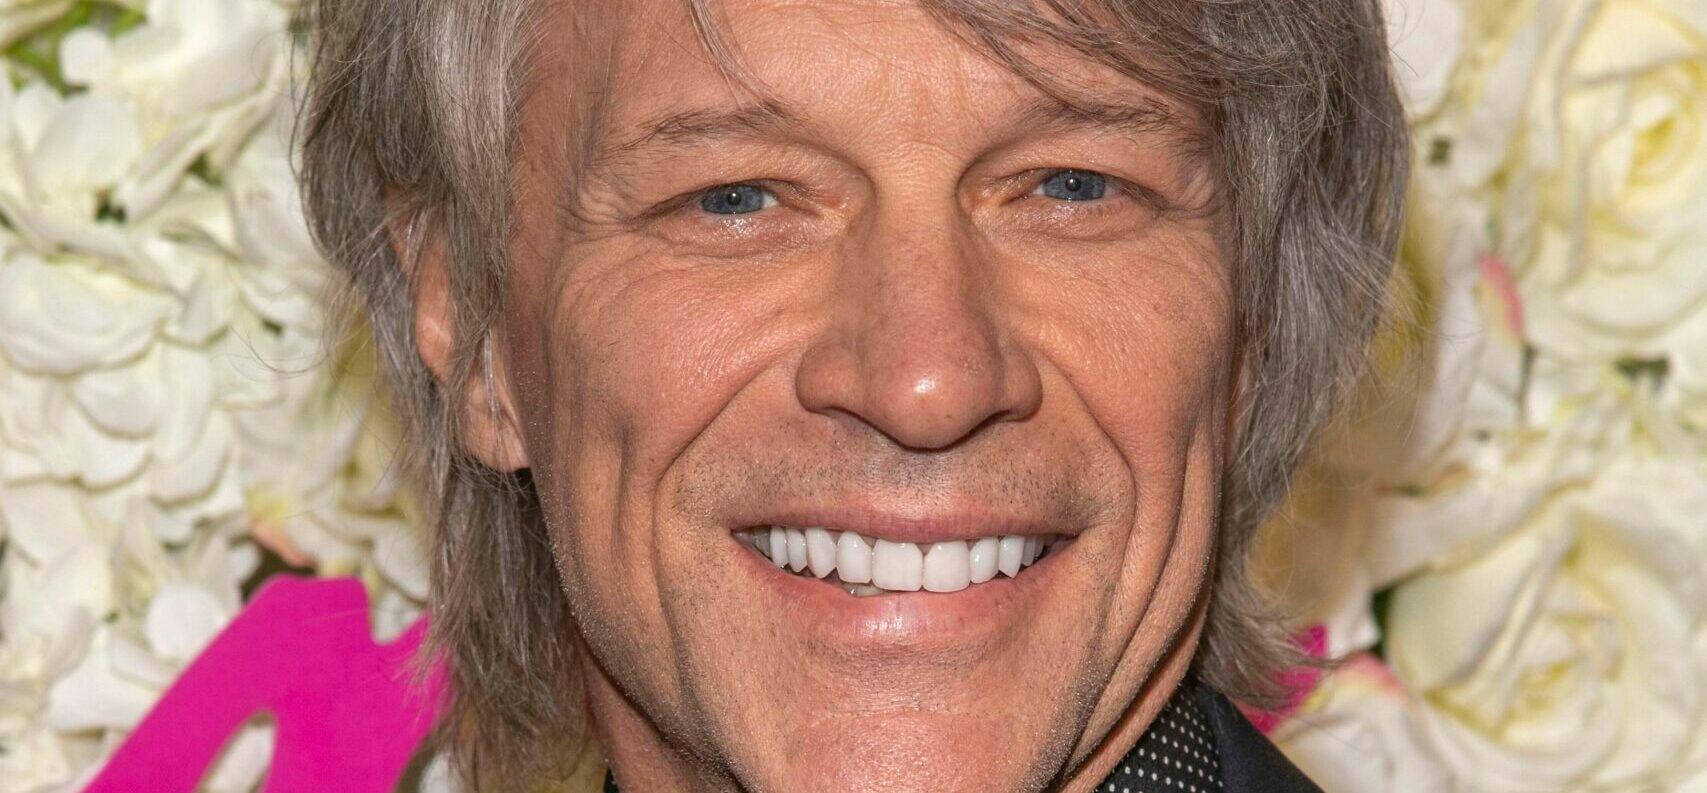 Jon Bon Jovi at "Diana, The Musical" Opening Night